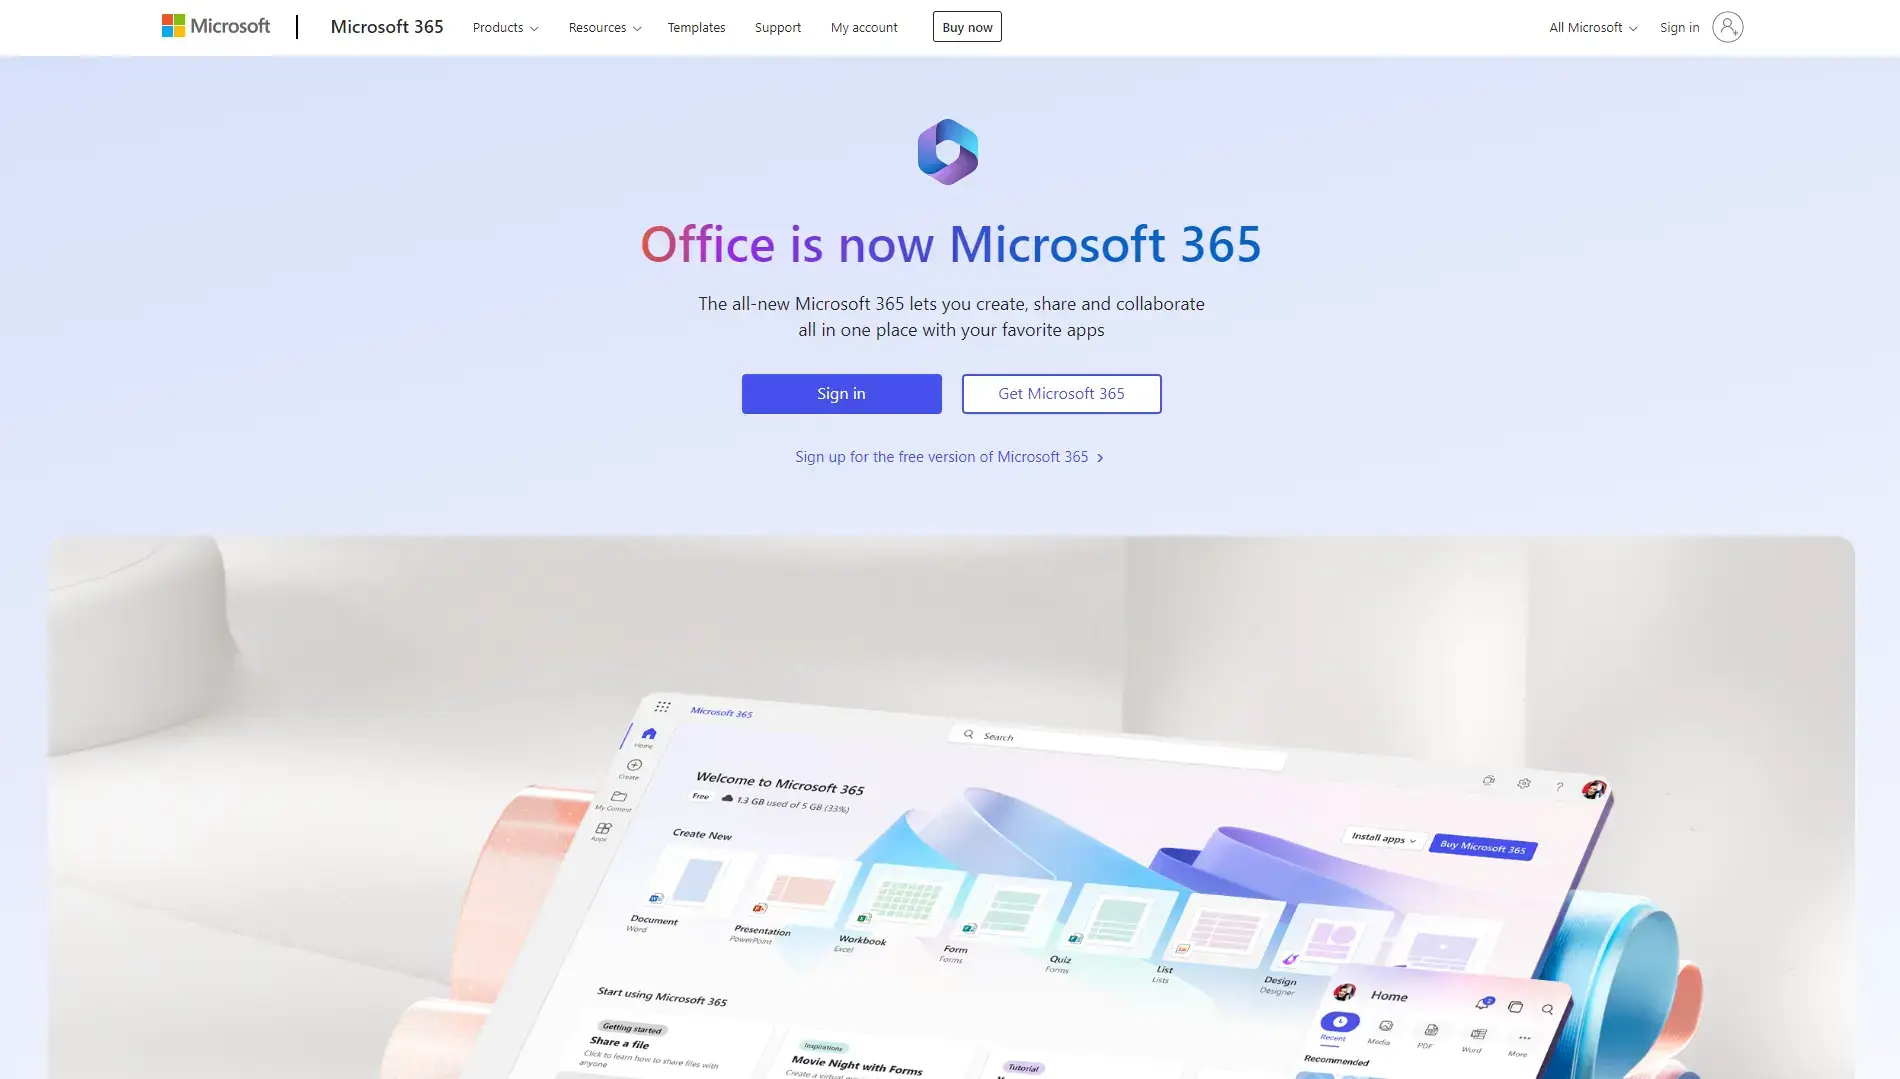 Microsoft 365 site homepage image.